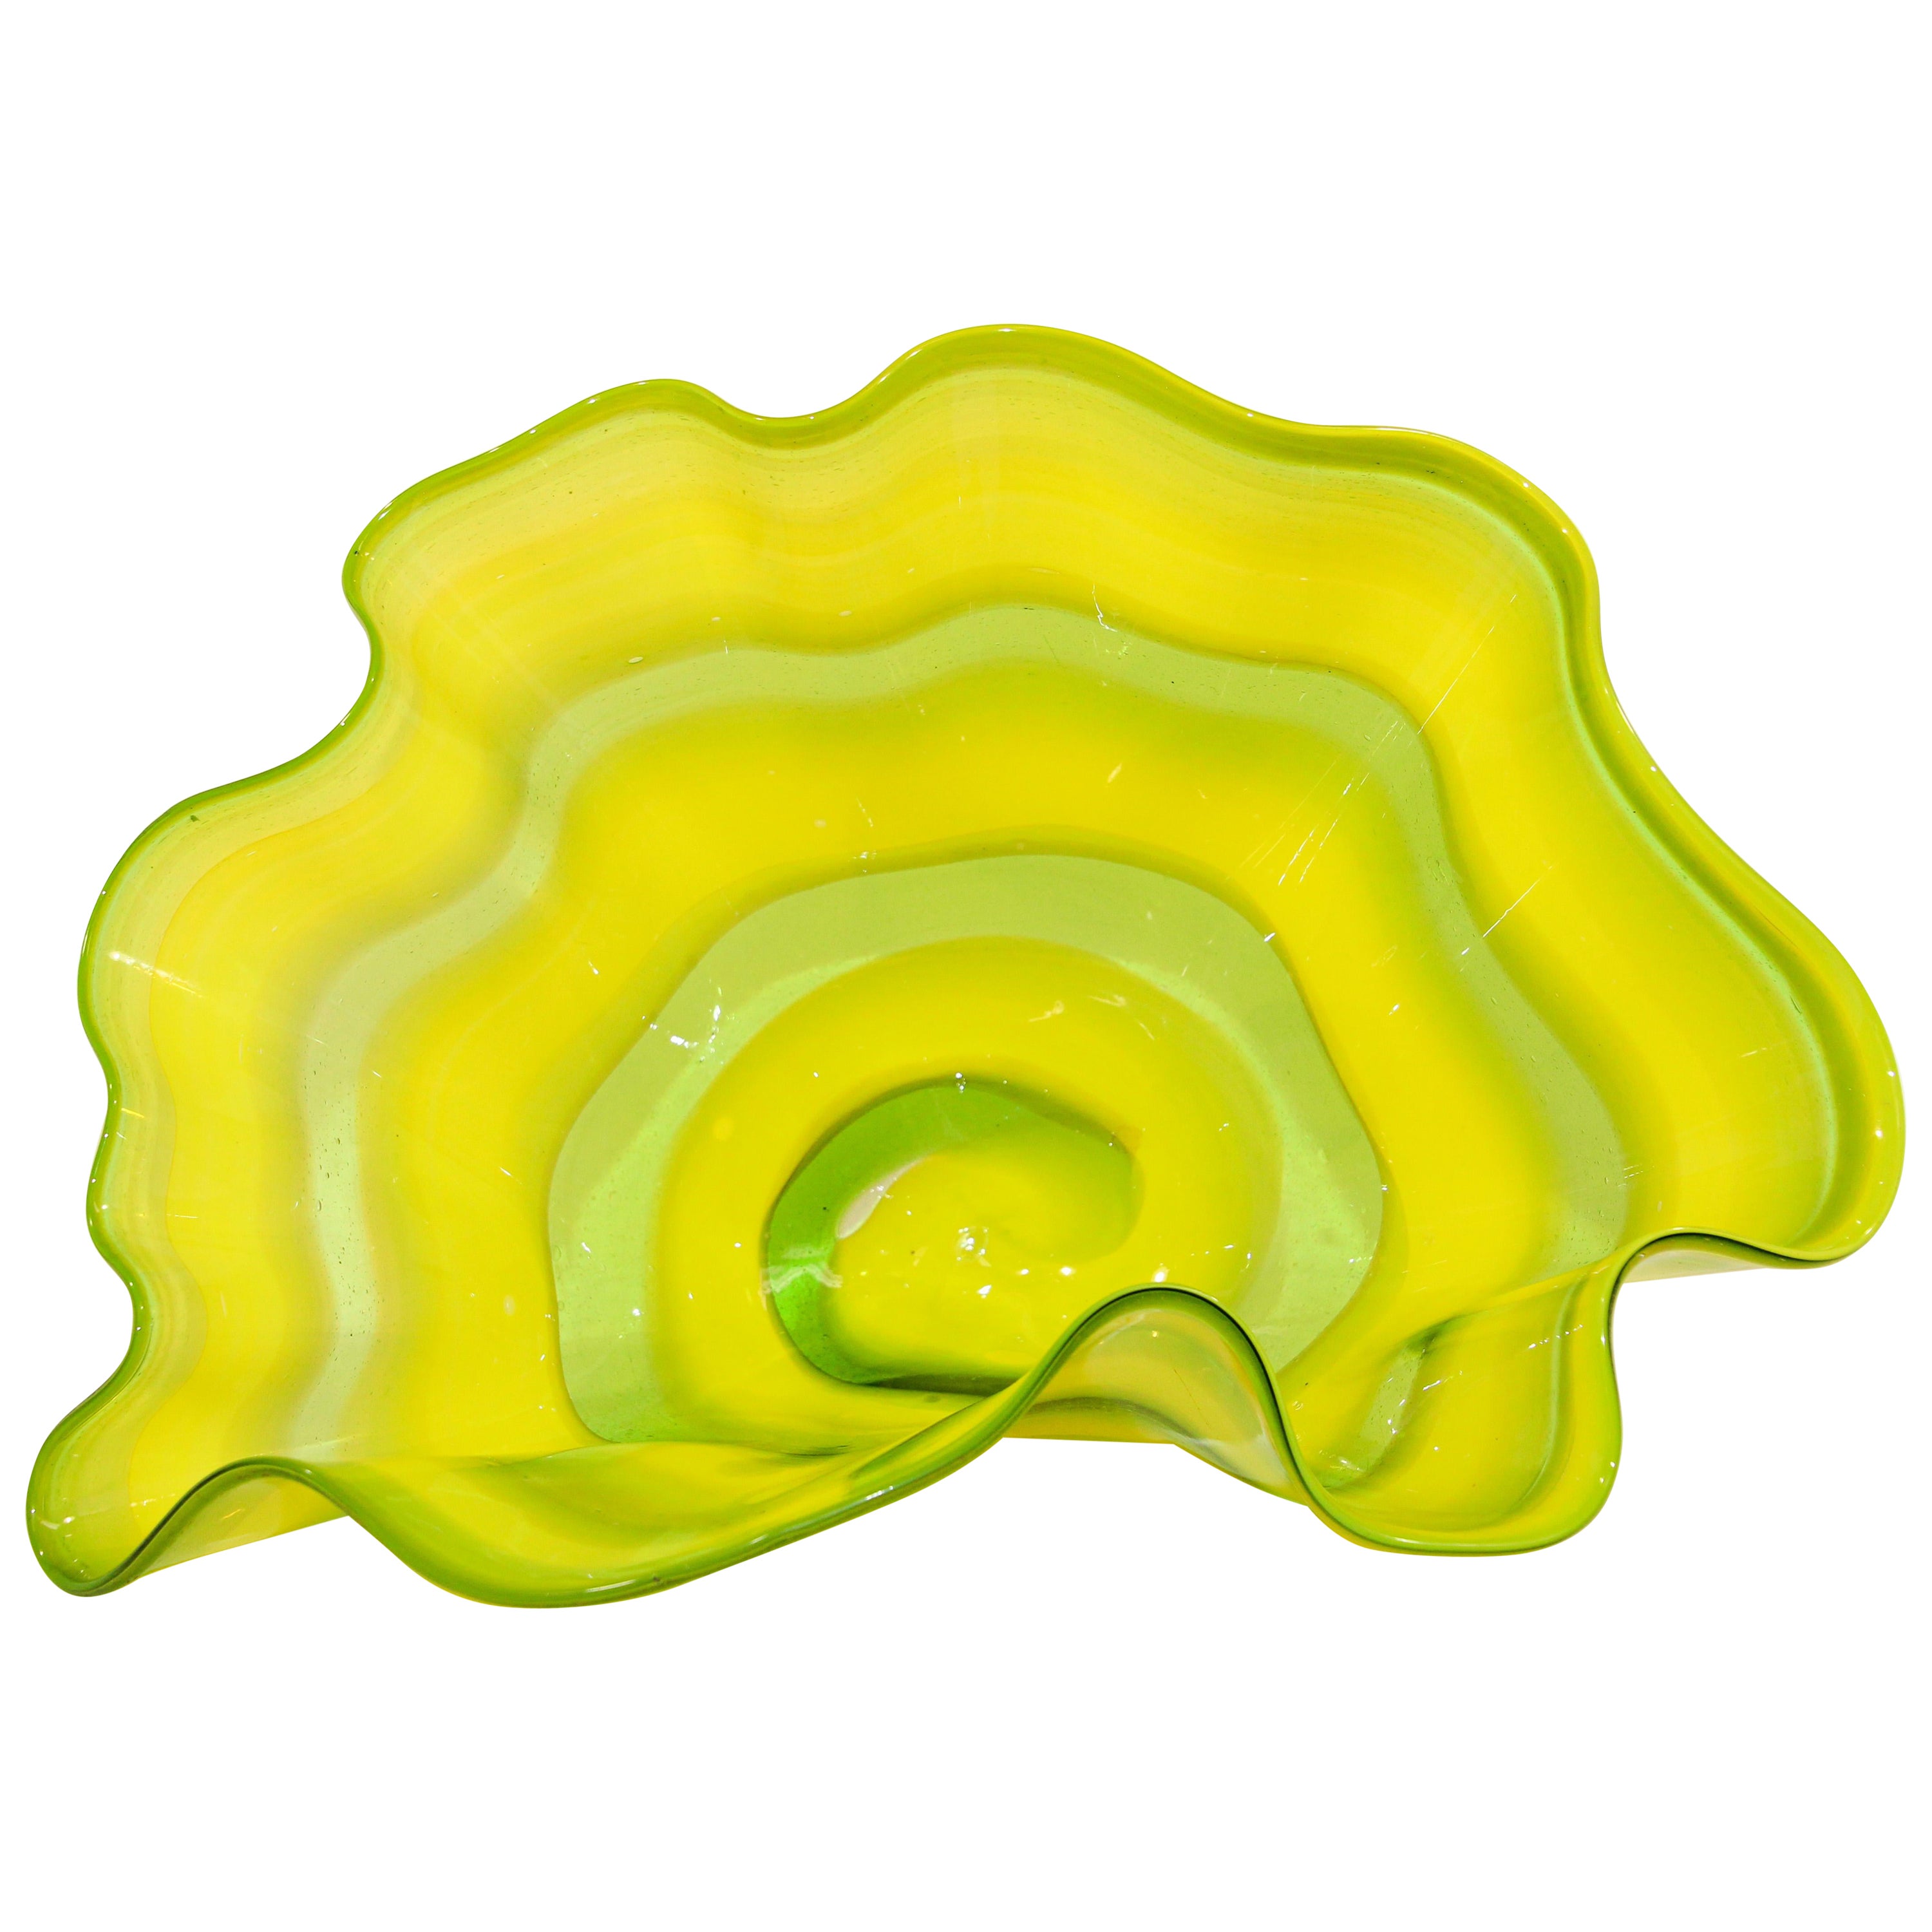 Grand bol en verre de Murano en forme de mer jaune et vert, dans le style de Chihuly